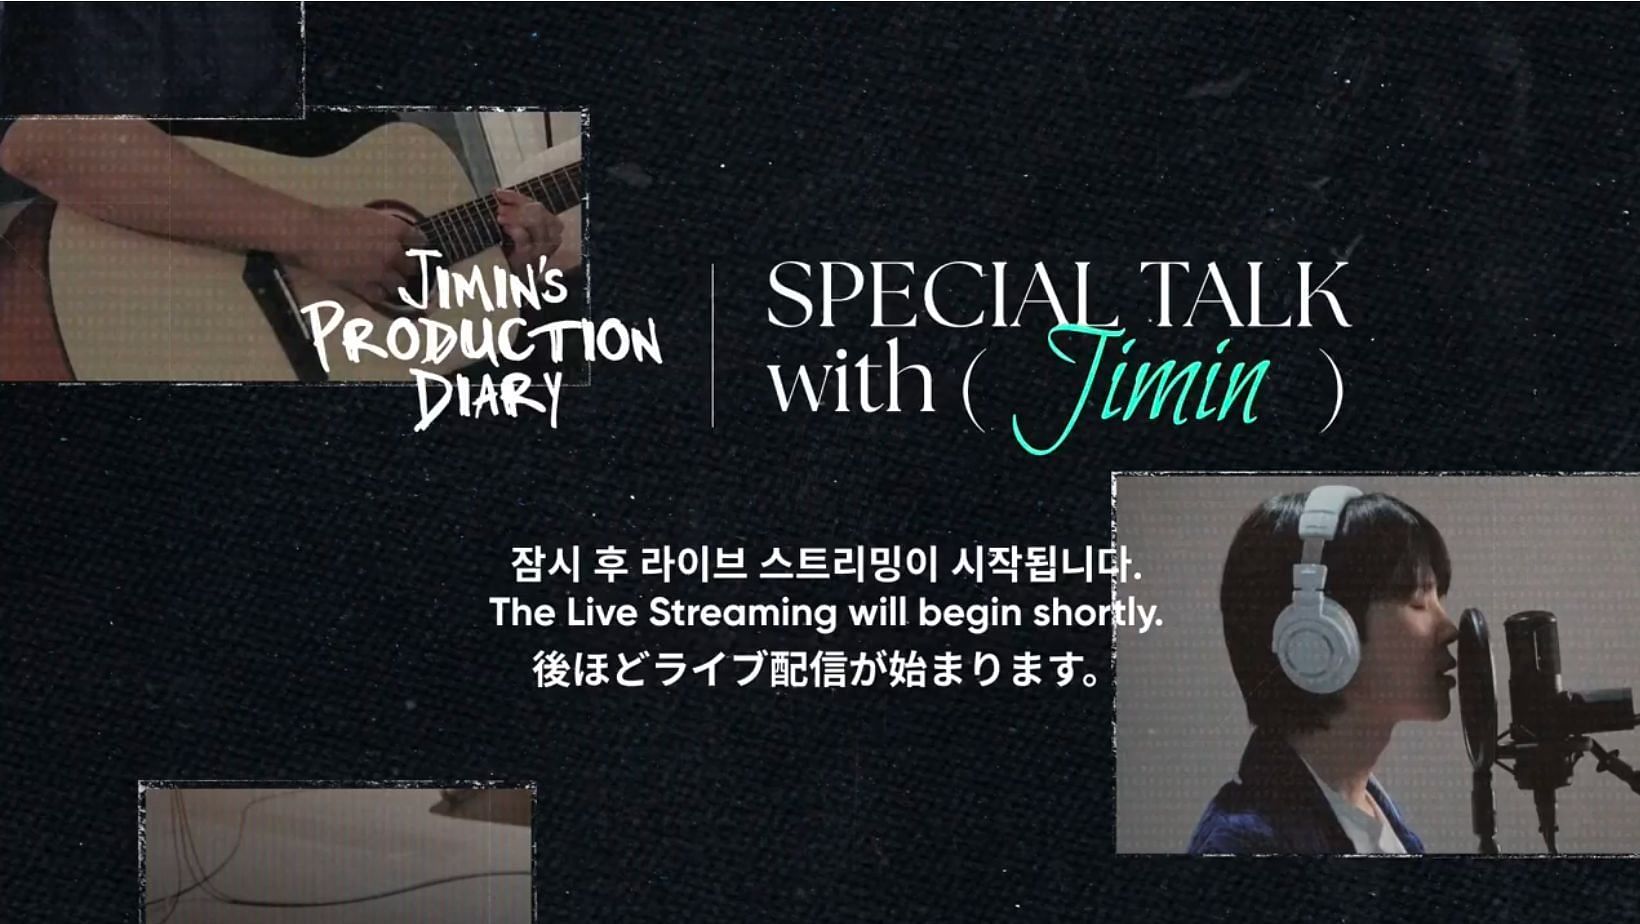 BTS Jimin hints at  solo concert possibilities during his Special Talk show. (Image via X/@weverseofficial)